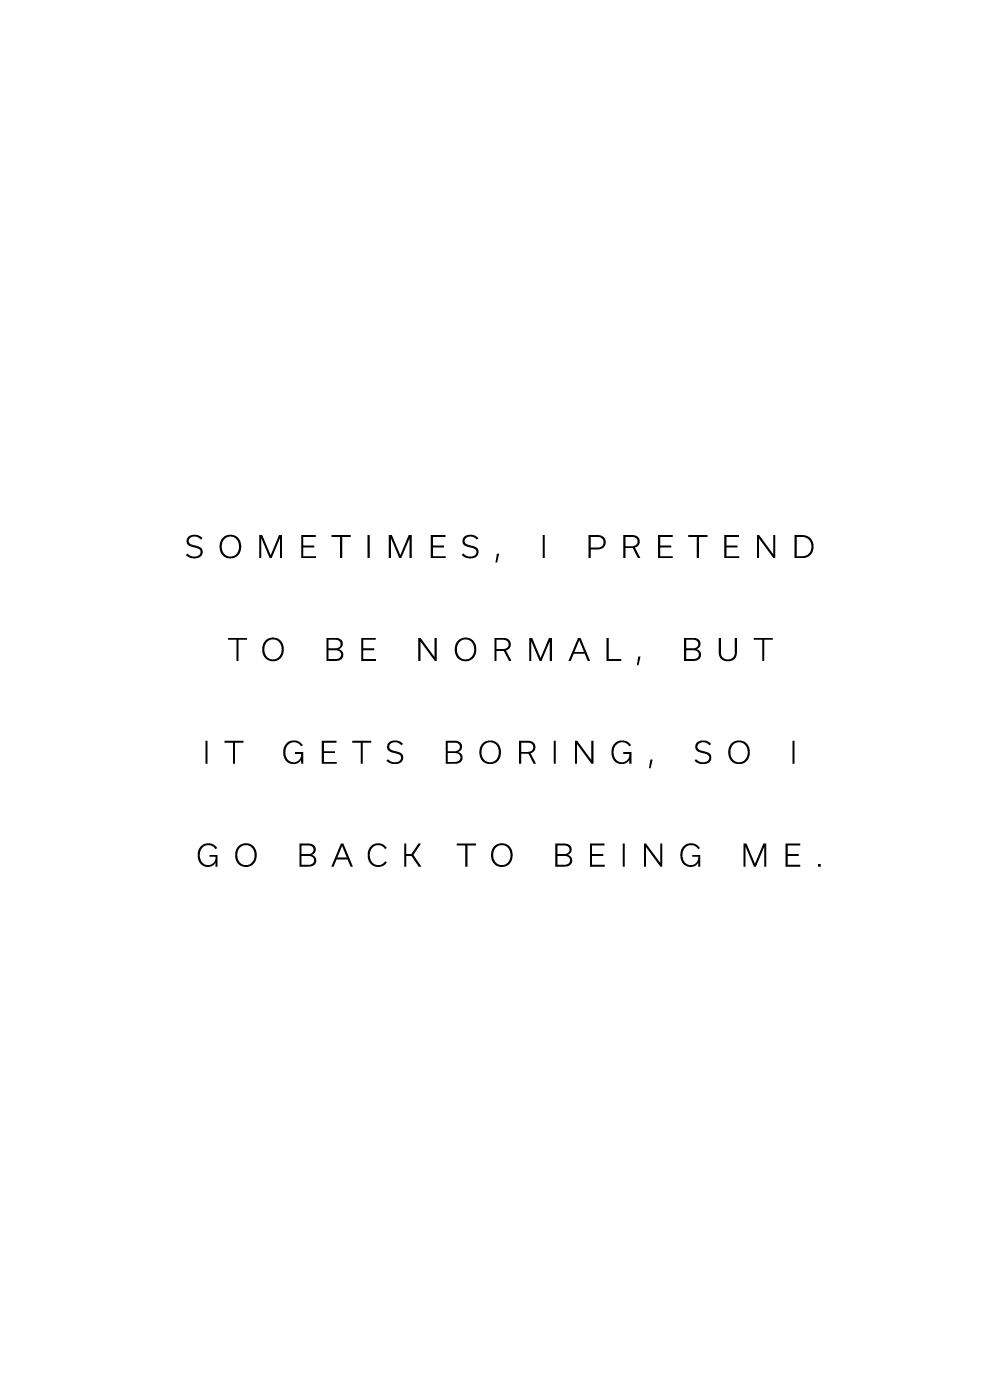 "Sometimes, I pretend to be normal" citatplakat